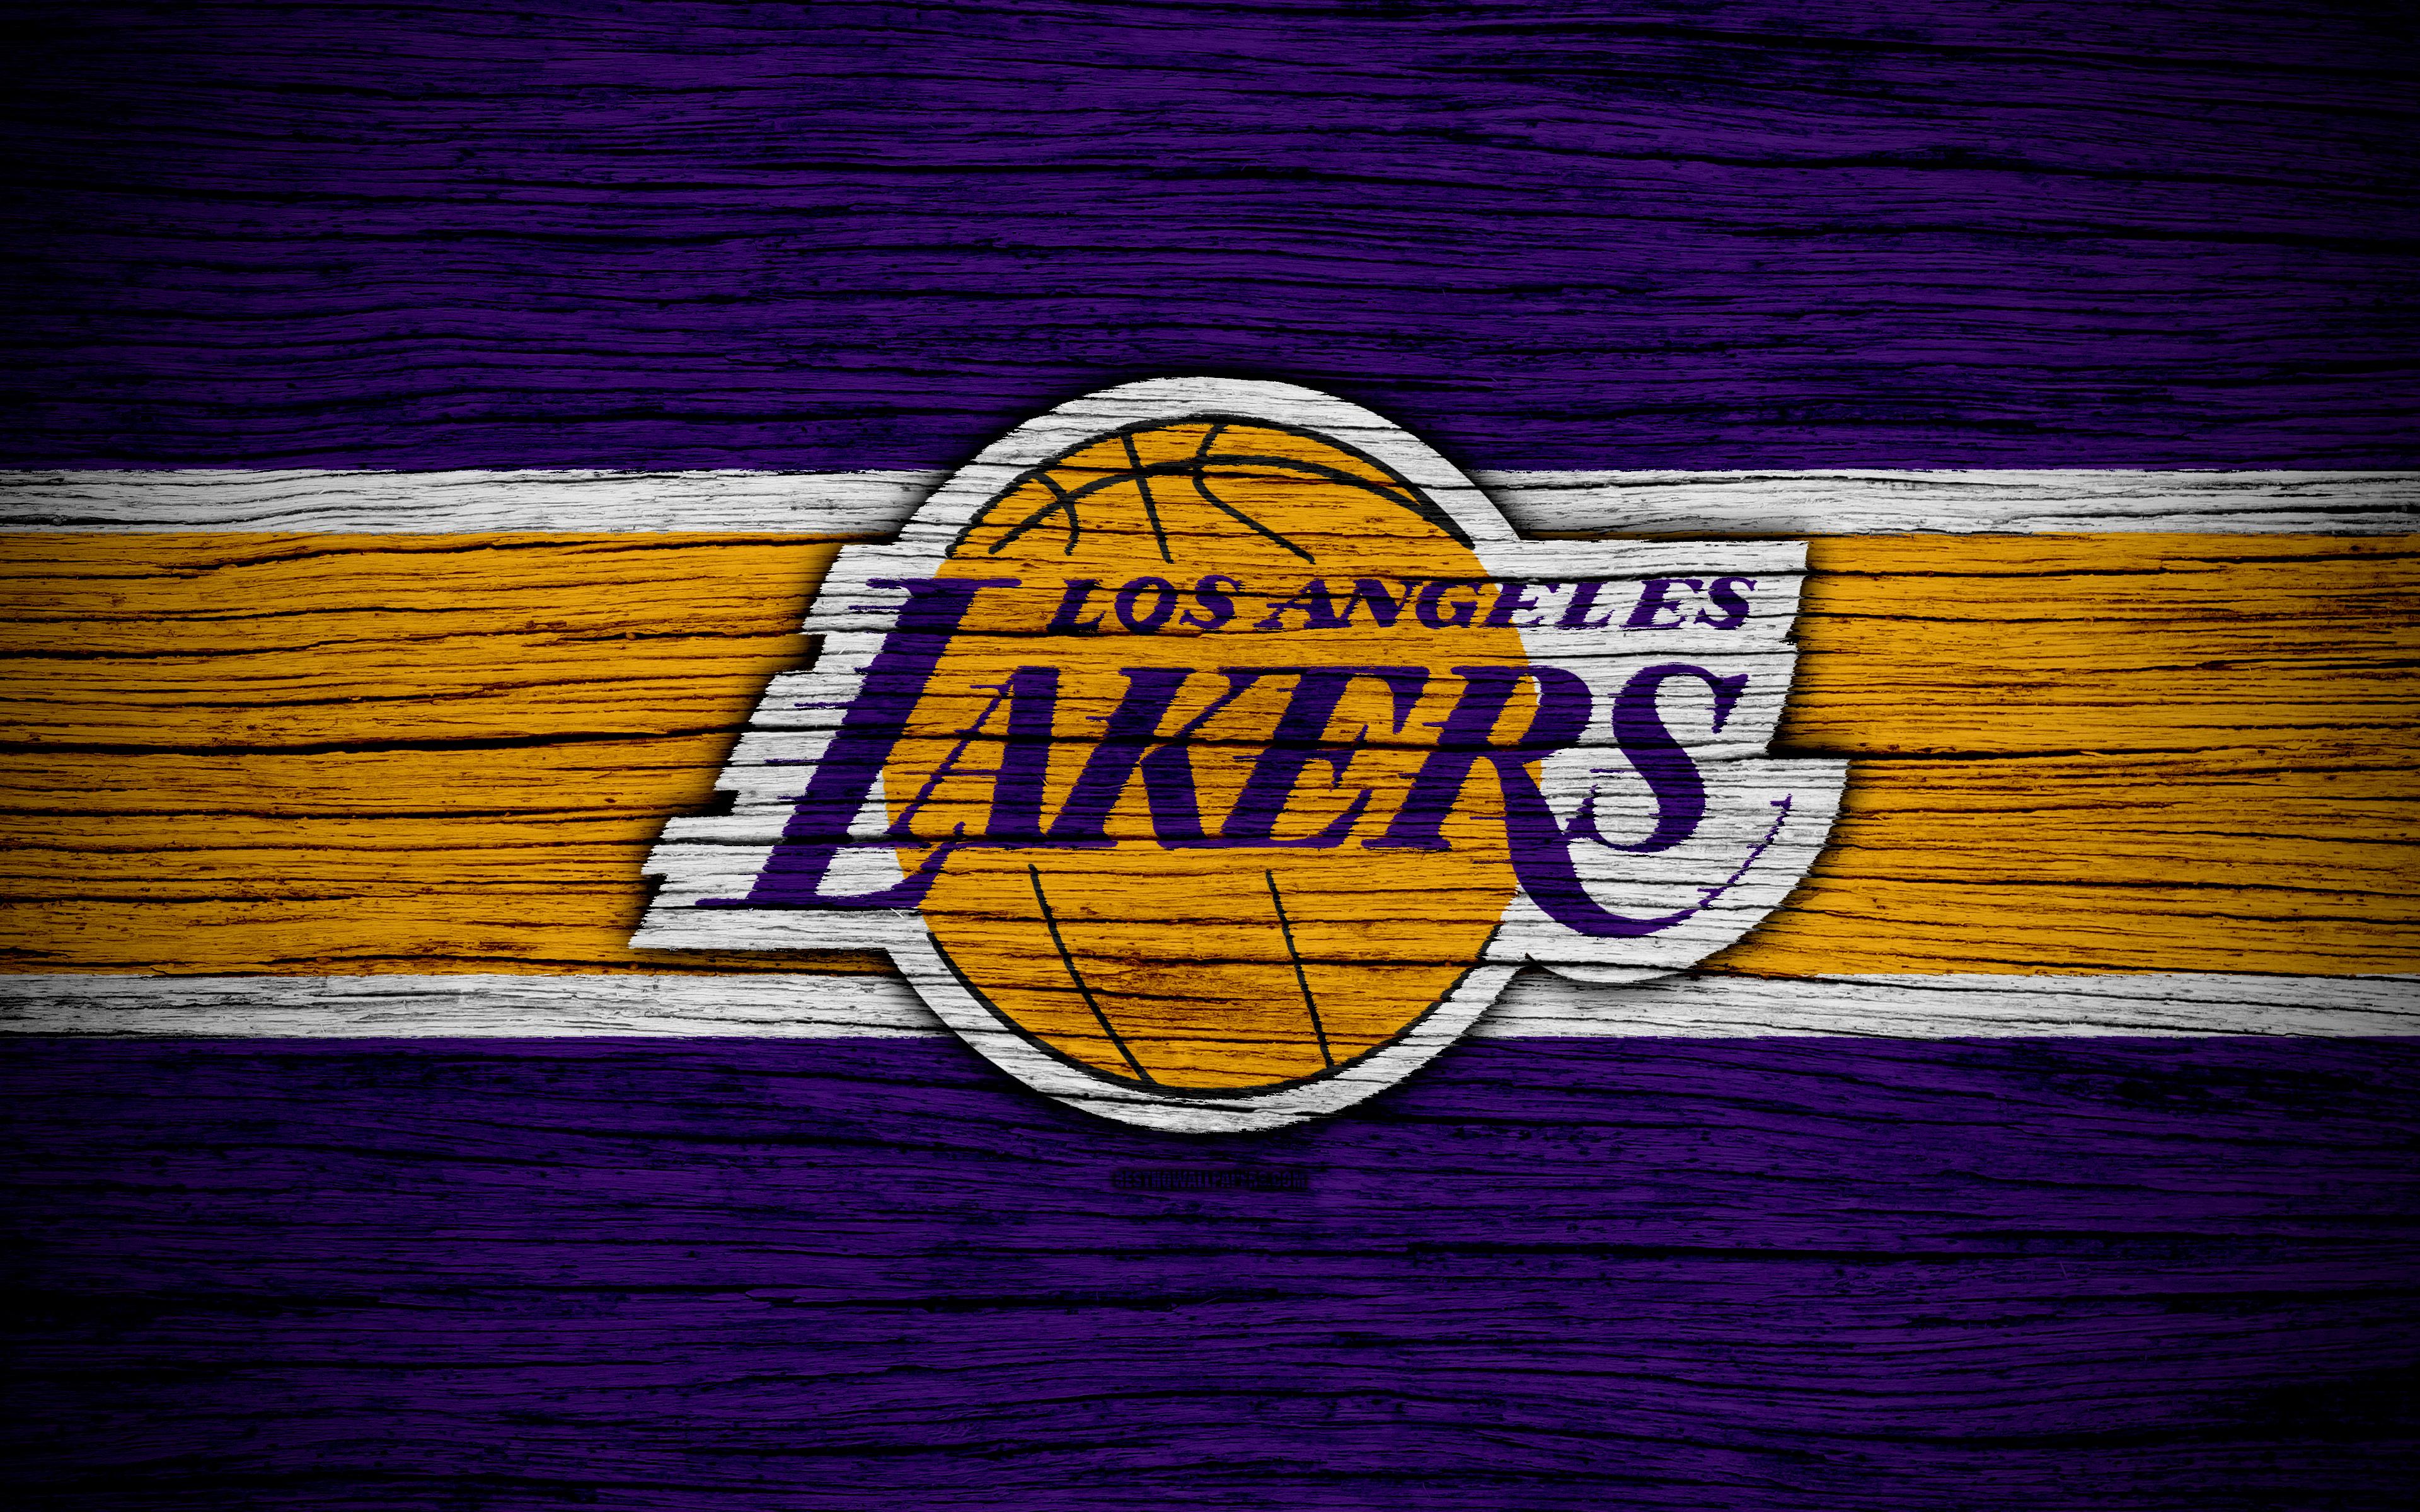 Lakers Basketball Wallpapers Wallpaper Cave